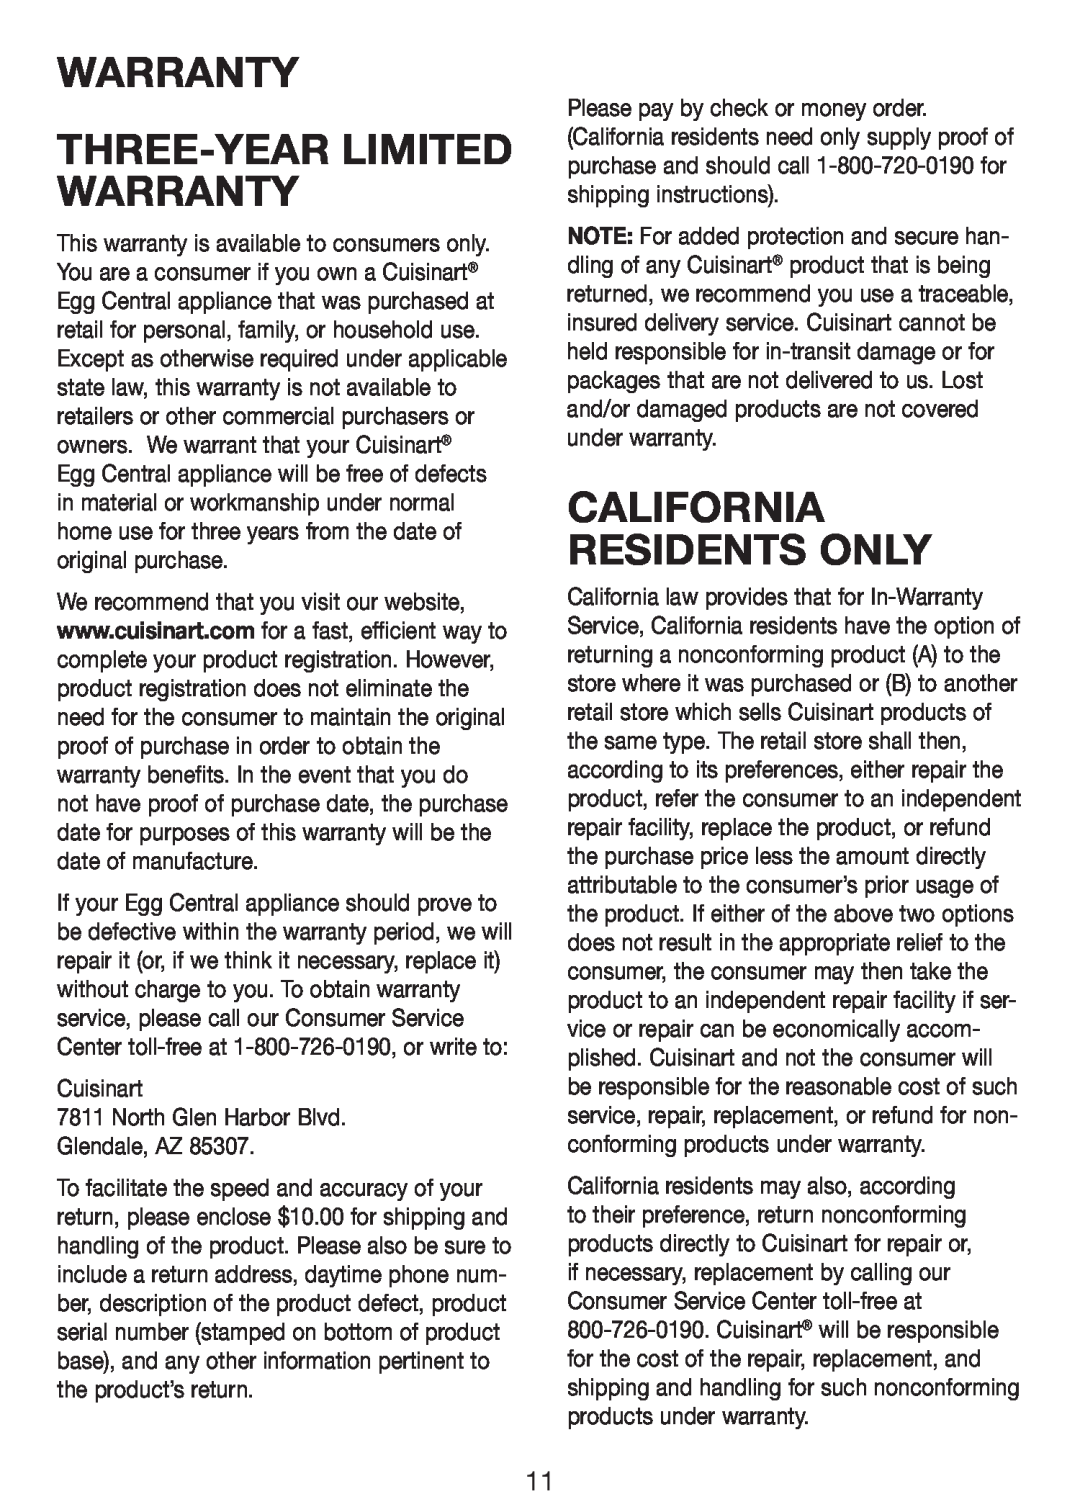 Cuisinart CEC-10 manual WARRANTY Three-Year Limited Warranty, California Residents Only 